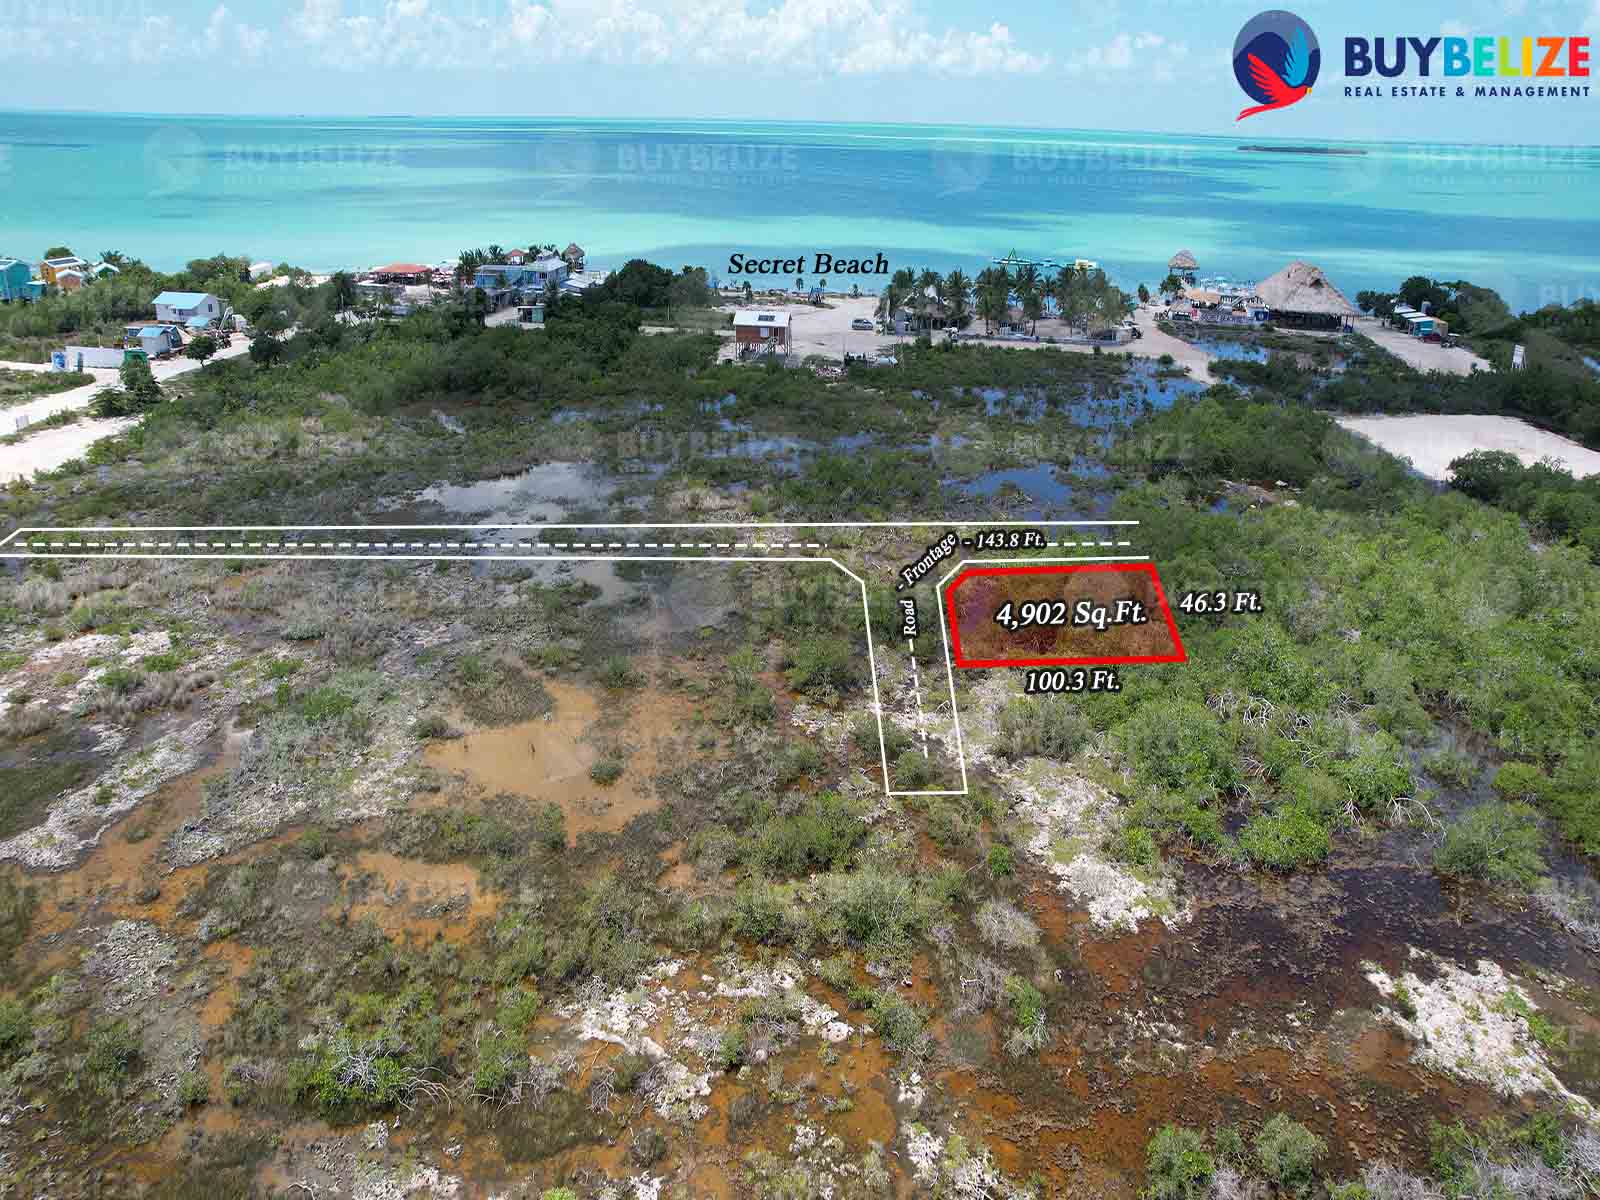 Grand Belizean Estate Corner lot for Sale, near Secret Beach, San Pedro Belize C.A $75,000 USD